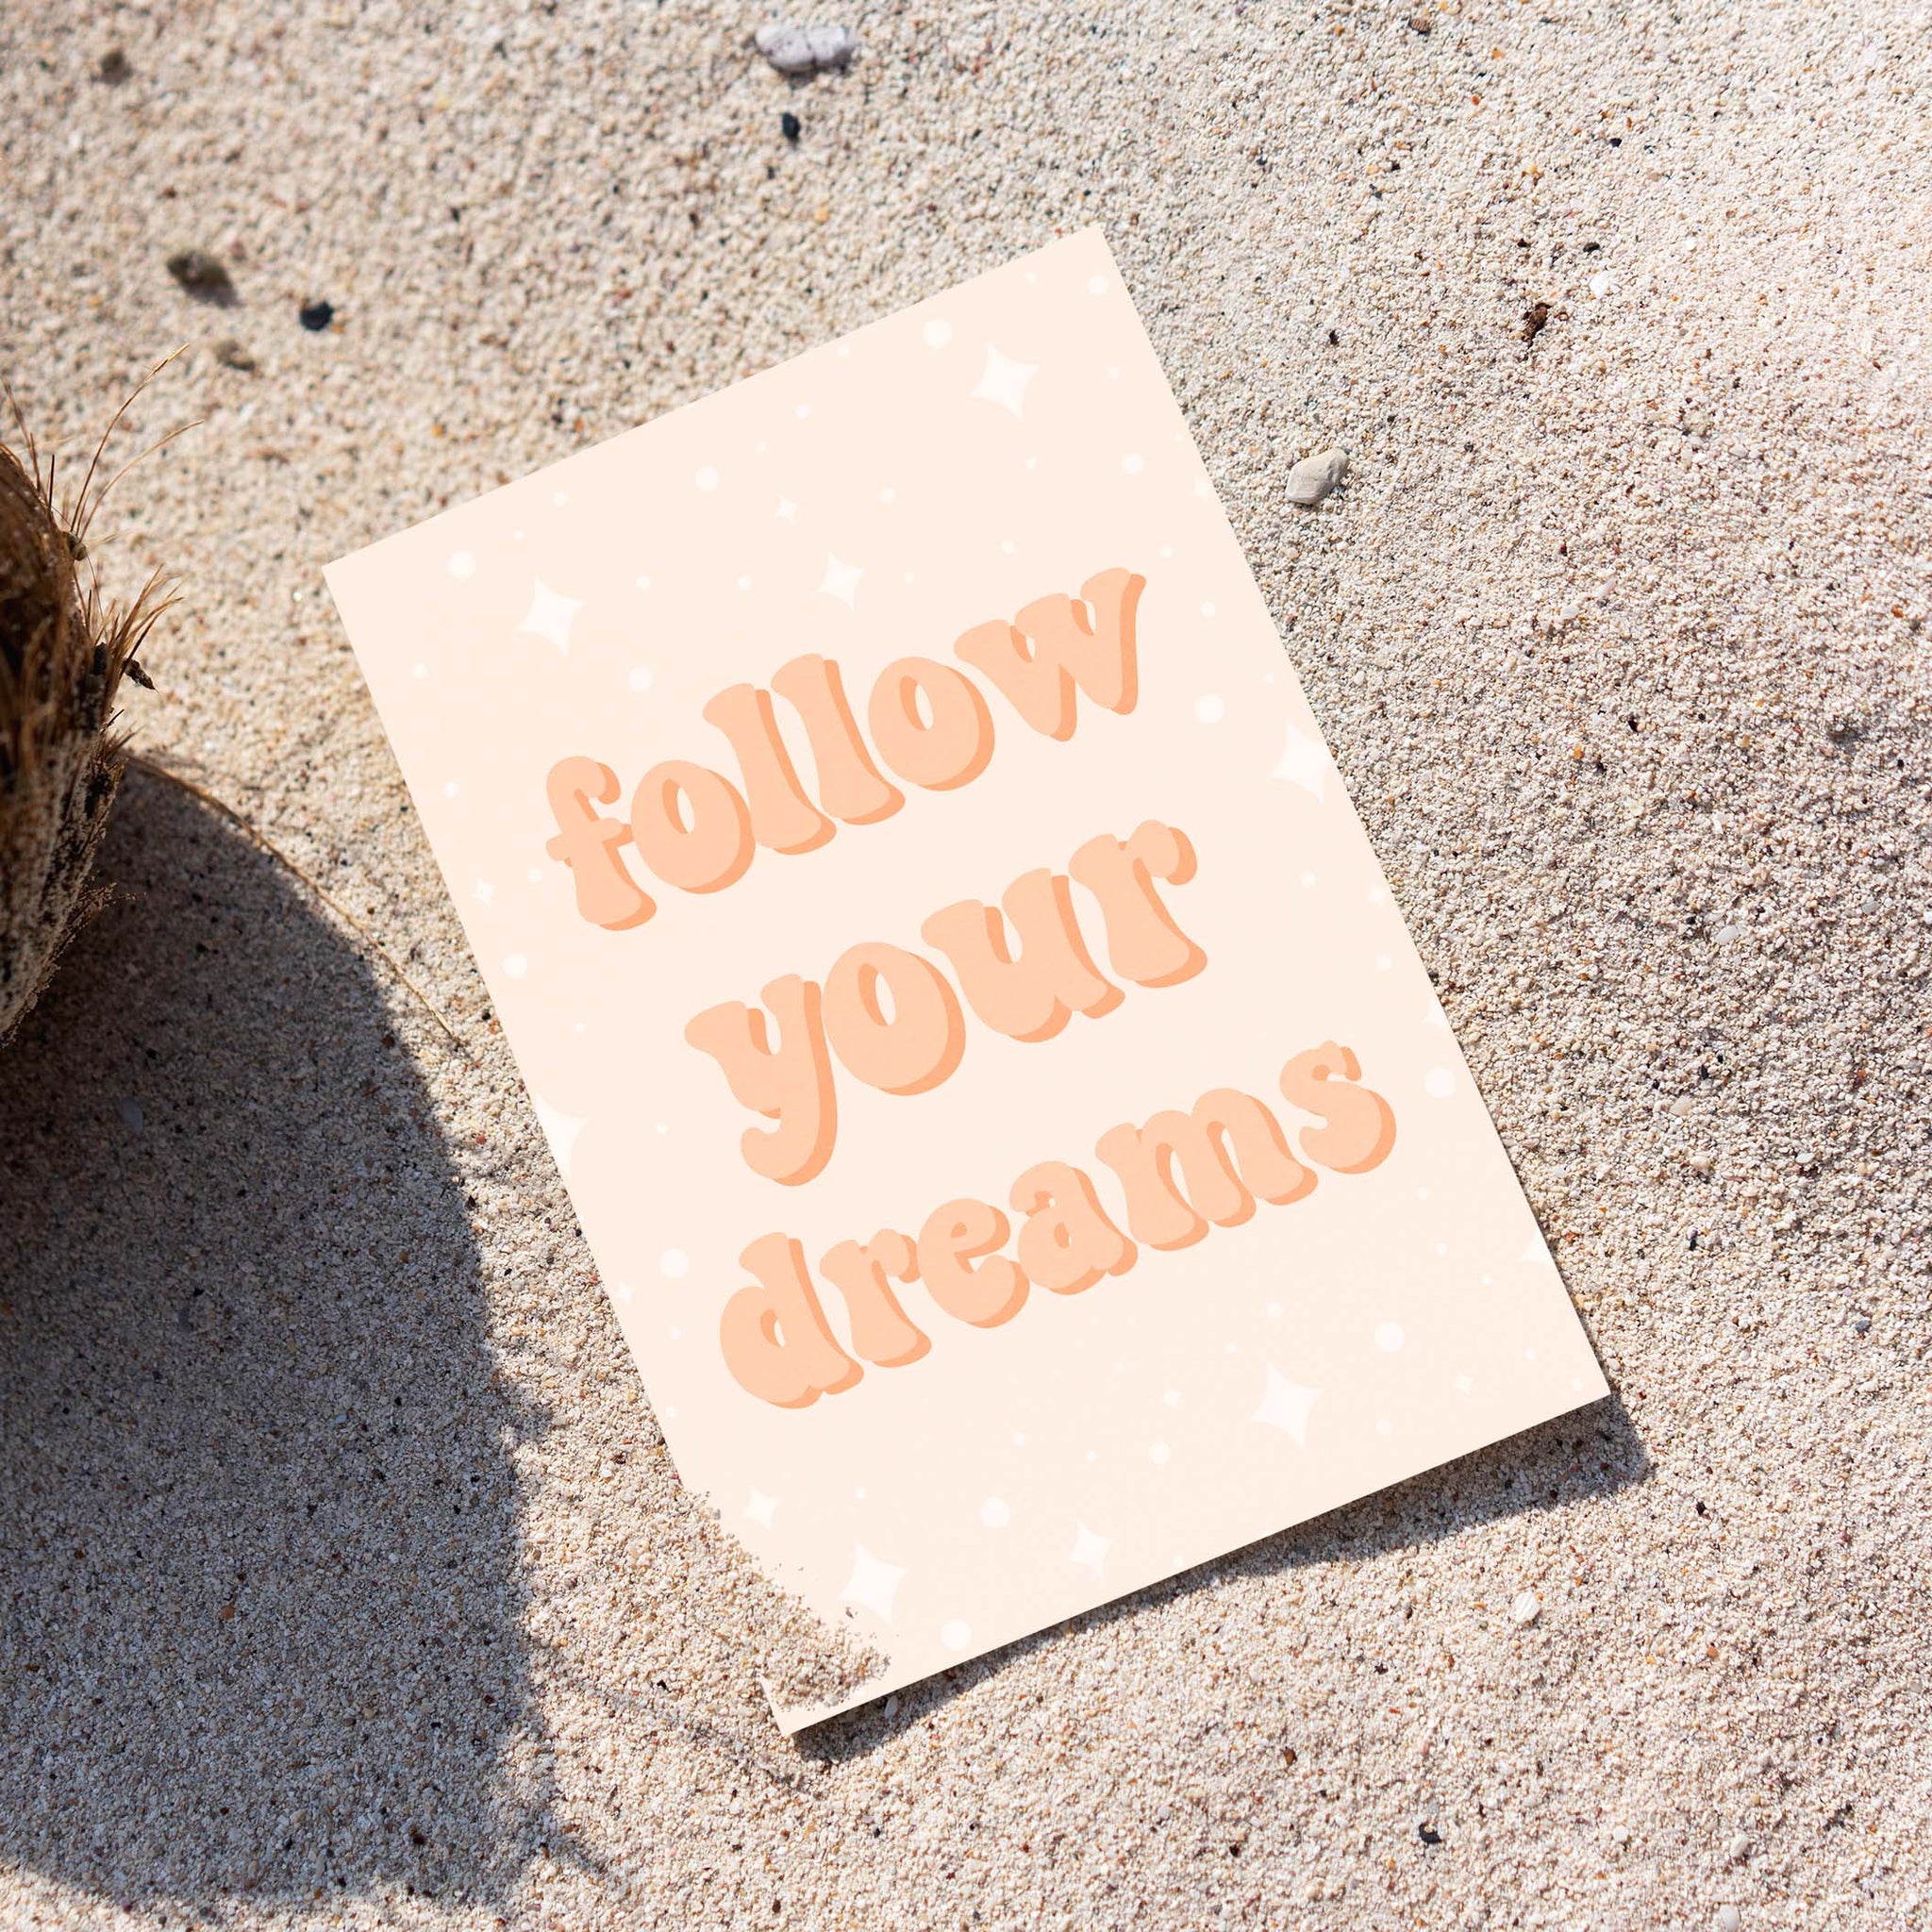 Follow Your Dreams Postcard